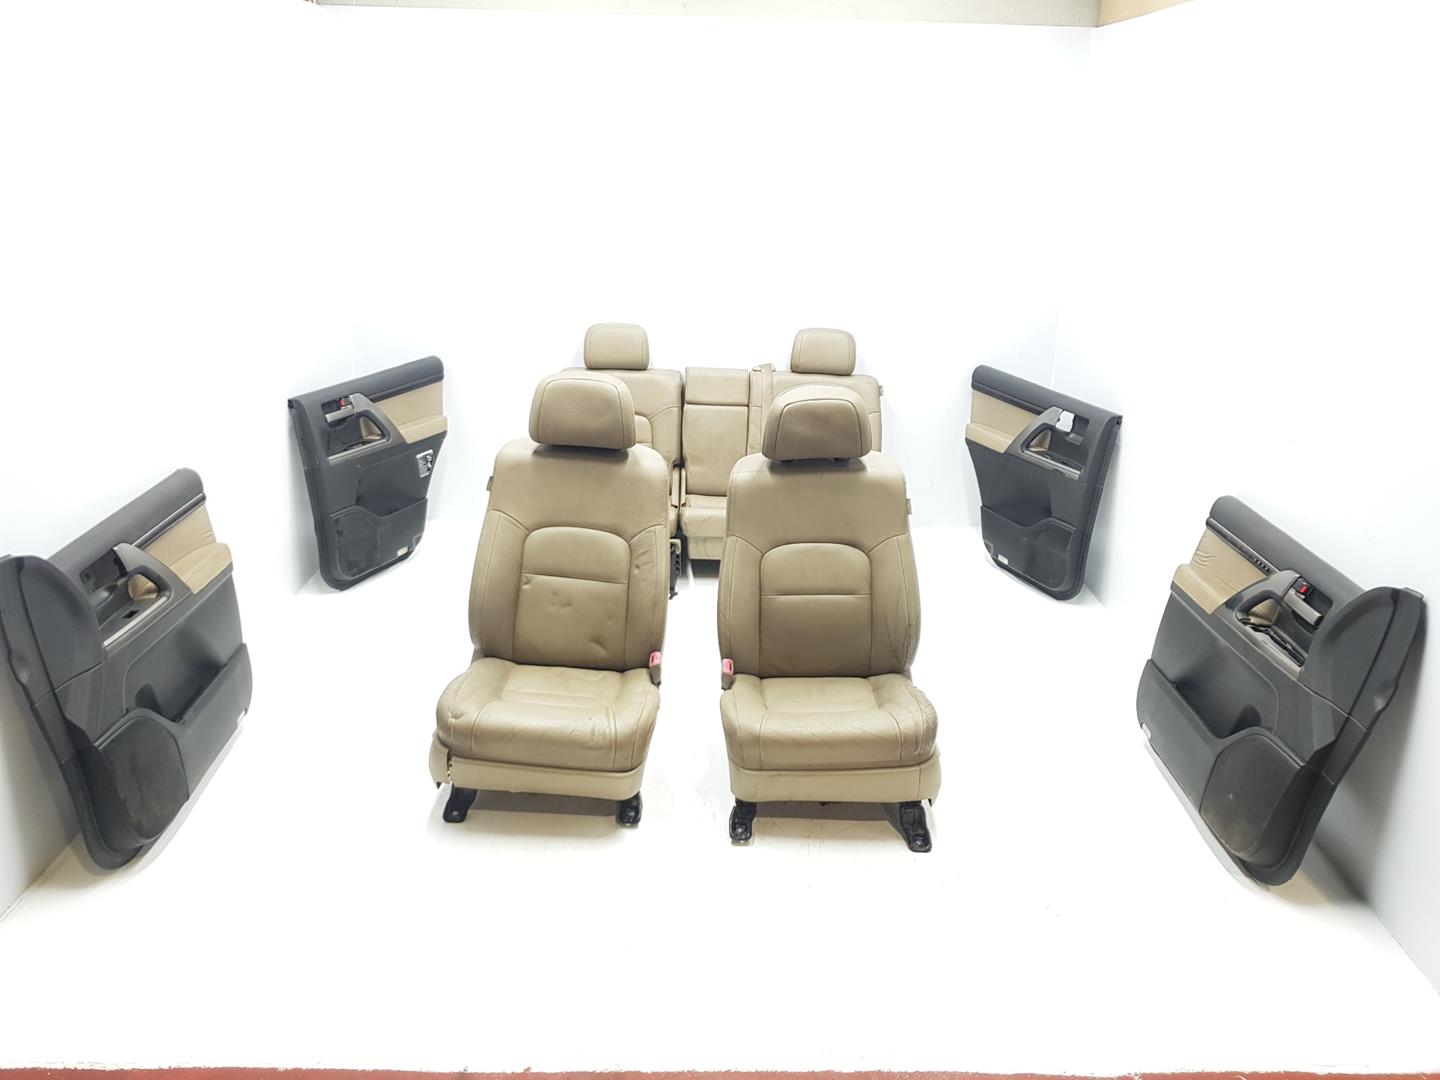 TOYOTA Land Cruiser J200 Series (2007-2015) Seats ASIENTOSDECUEROBEIGE 24135714